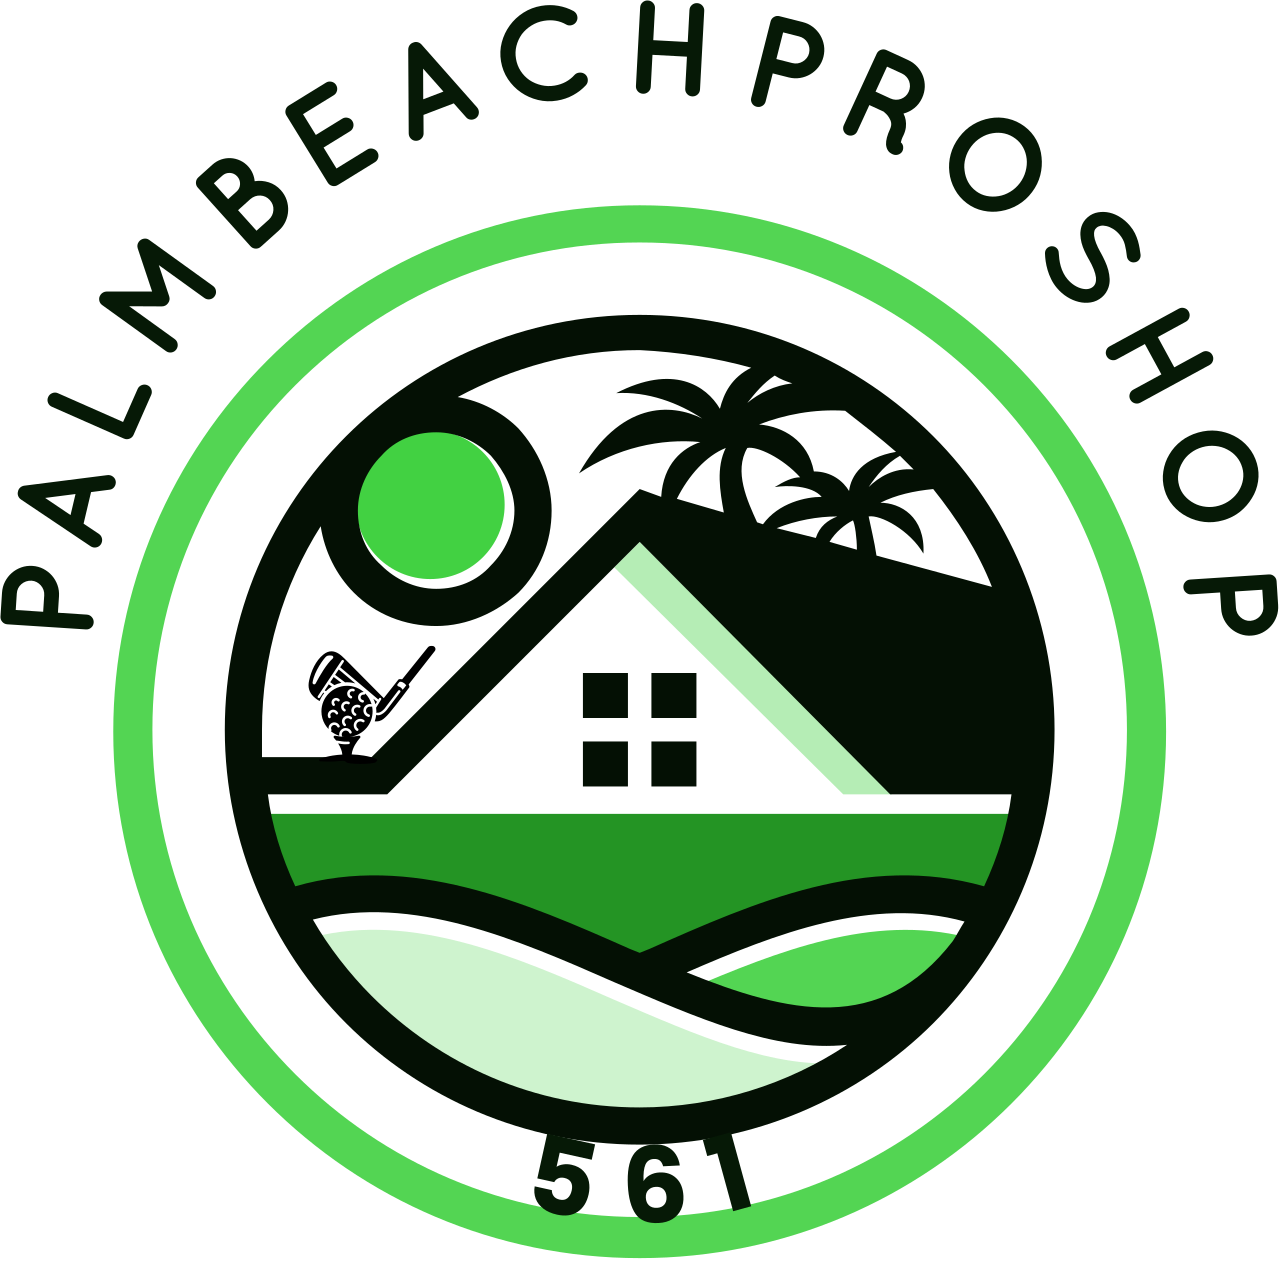 PALMBEACHPROSHOP's logo